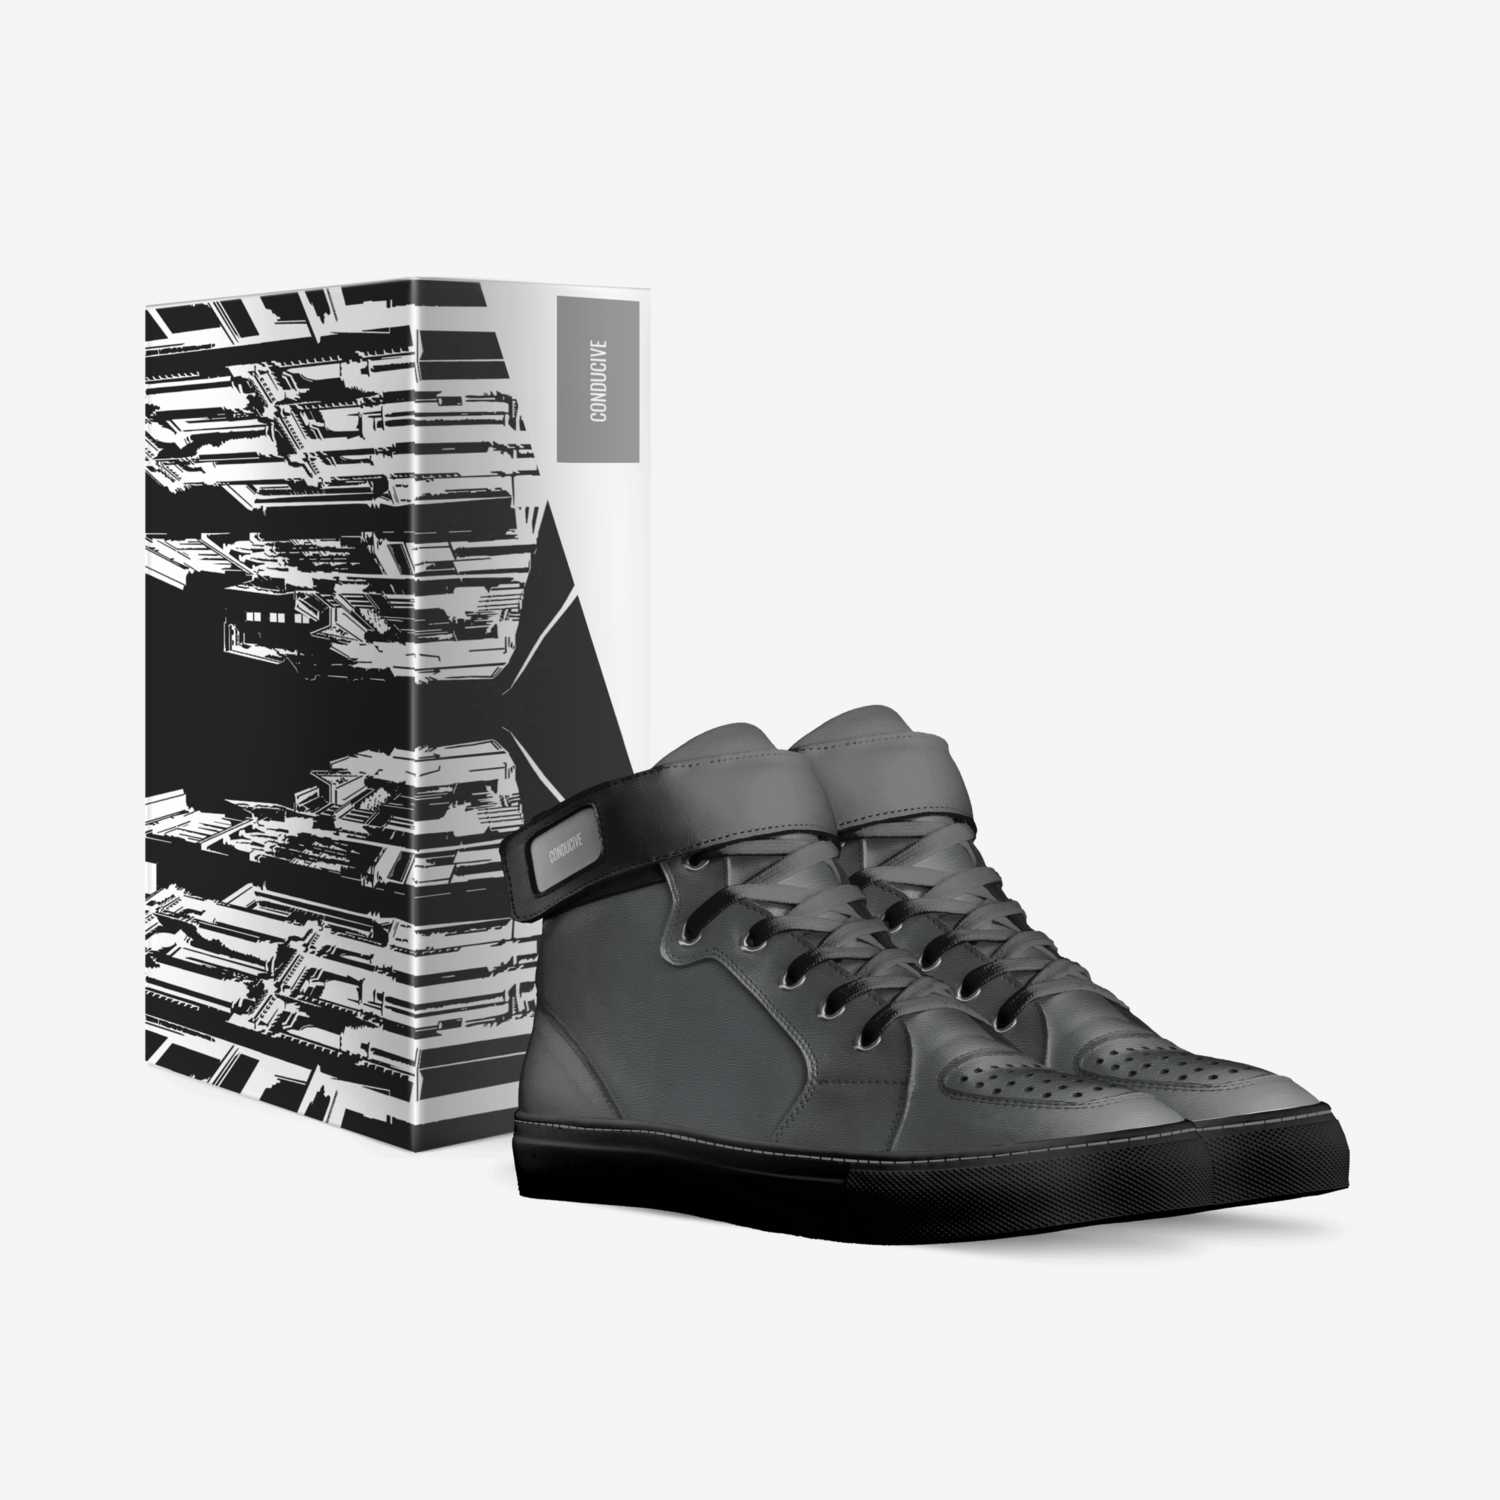 Conducive Kicks custom made in Italy shoes by Shaheed Smith | Box view